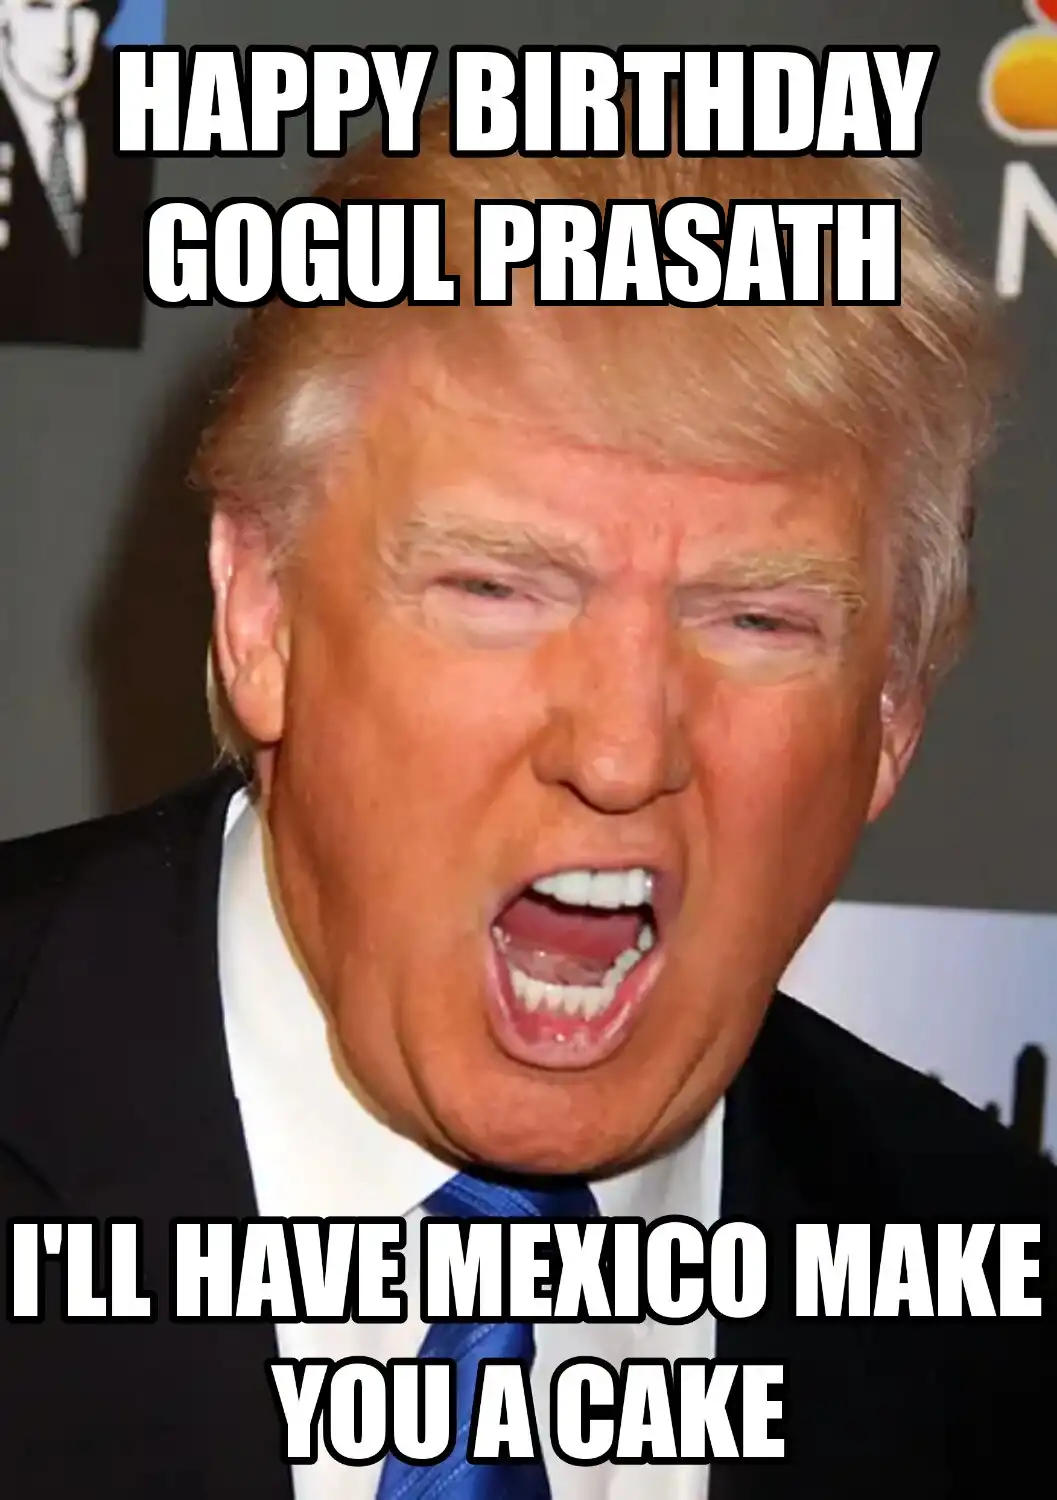 Happy Birthday Gogul prasath Mexico Make You A Cake Meme